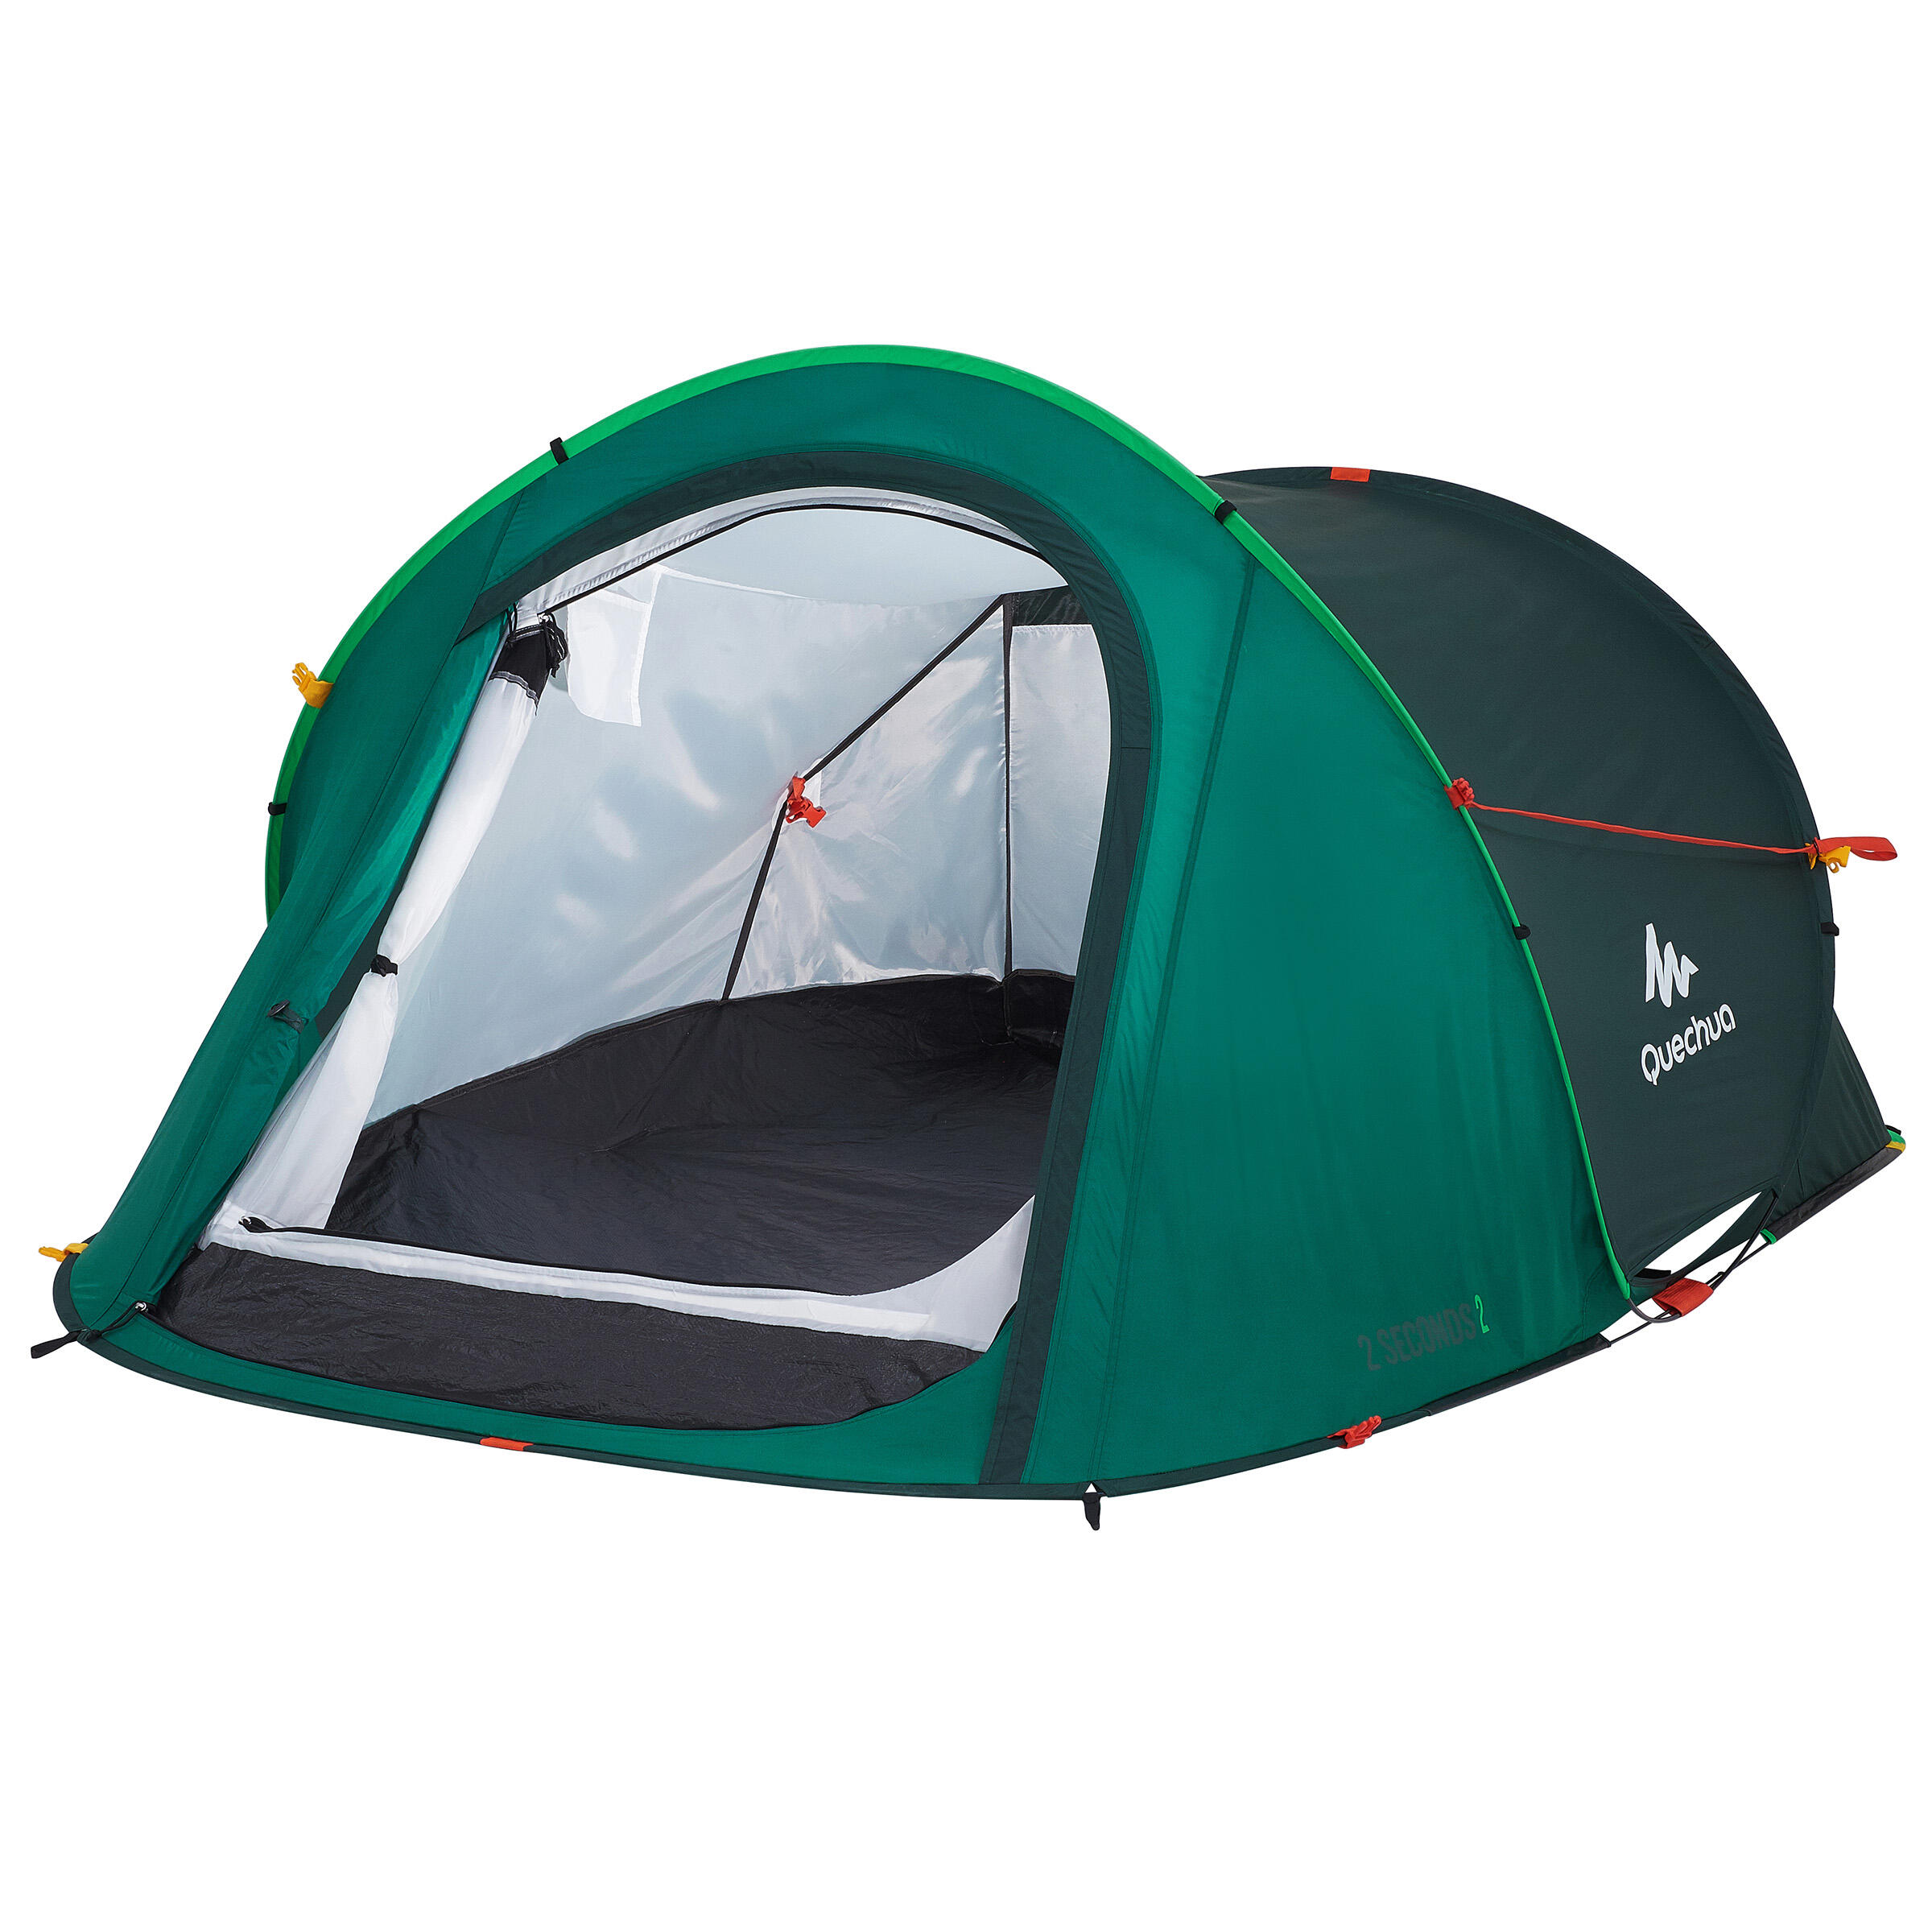 Man Waterproof Pop Up Camping Tent 